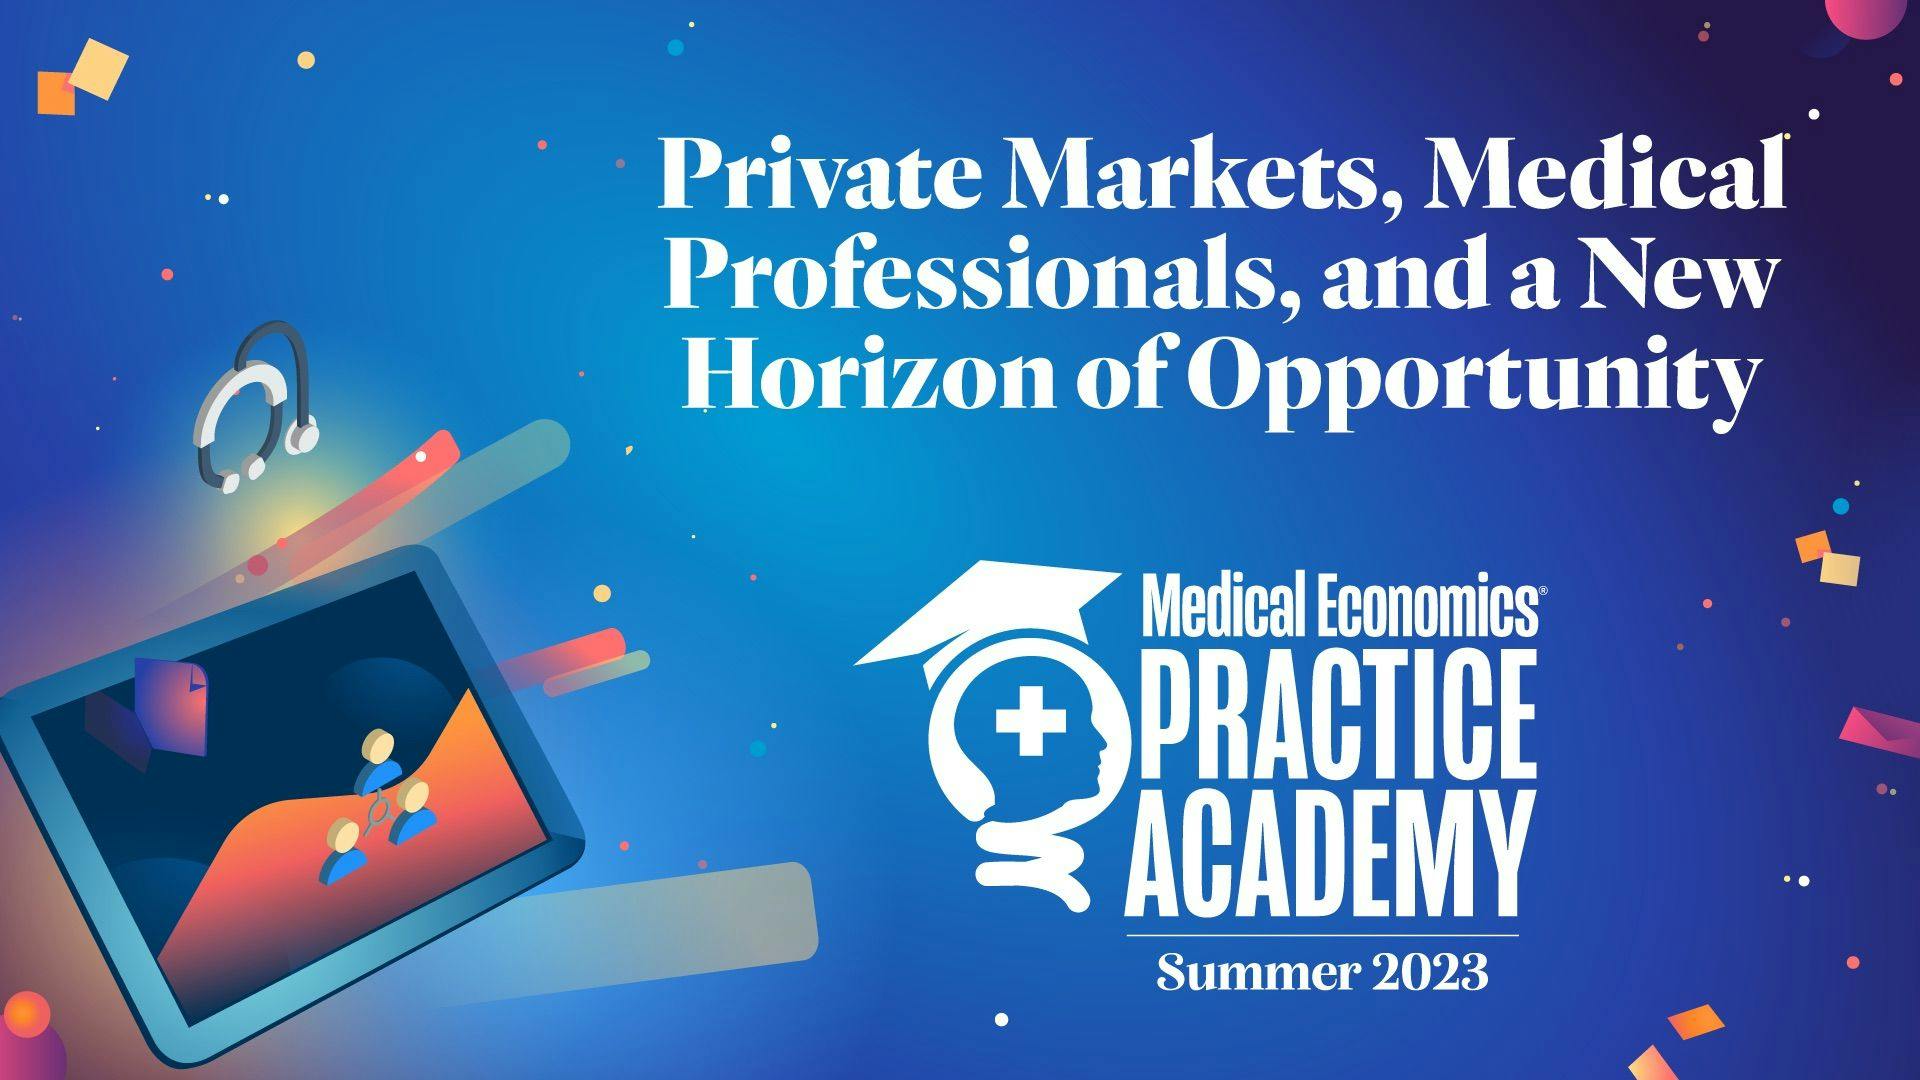 Practice Academy Summer 2023: ©MJH Life Sciences